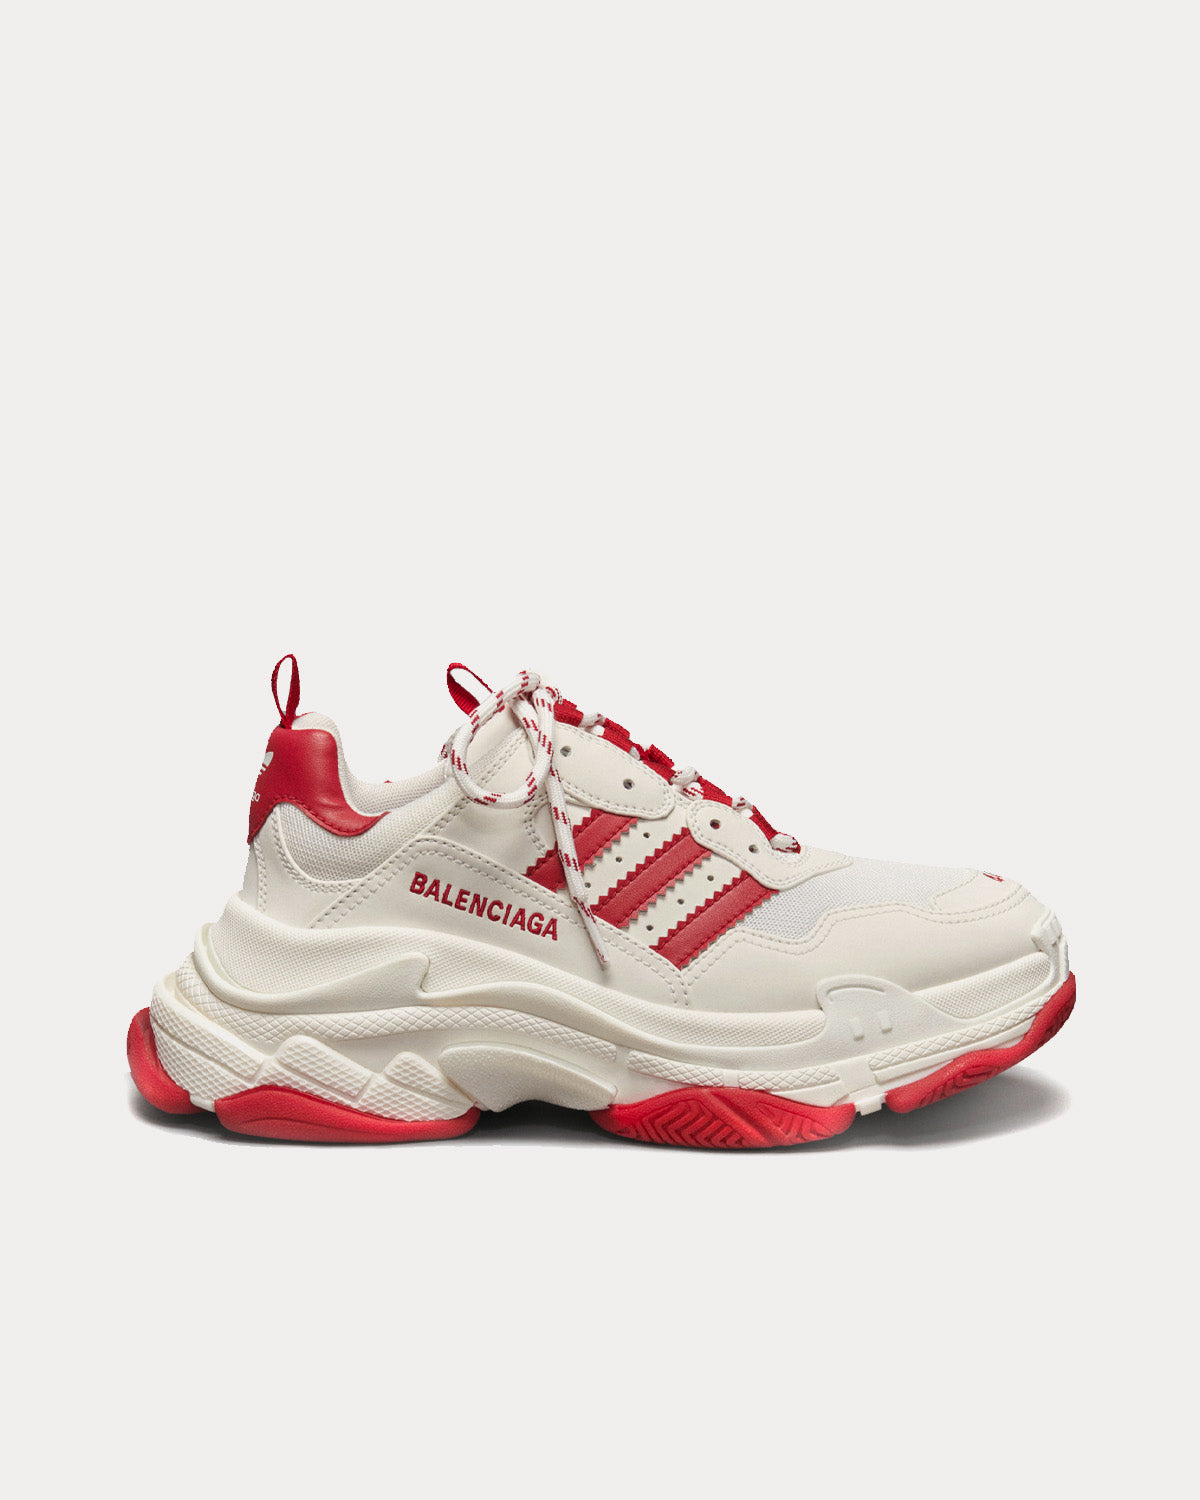 Balenciaga - Men's x Adidas Speed LT Hi-Top Sneakers - Red - Sneakers